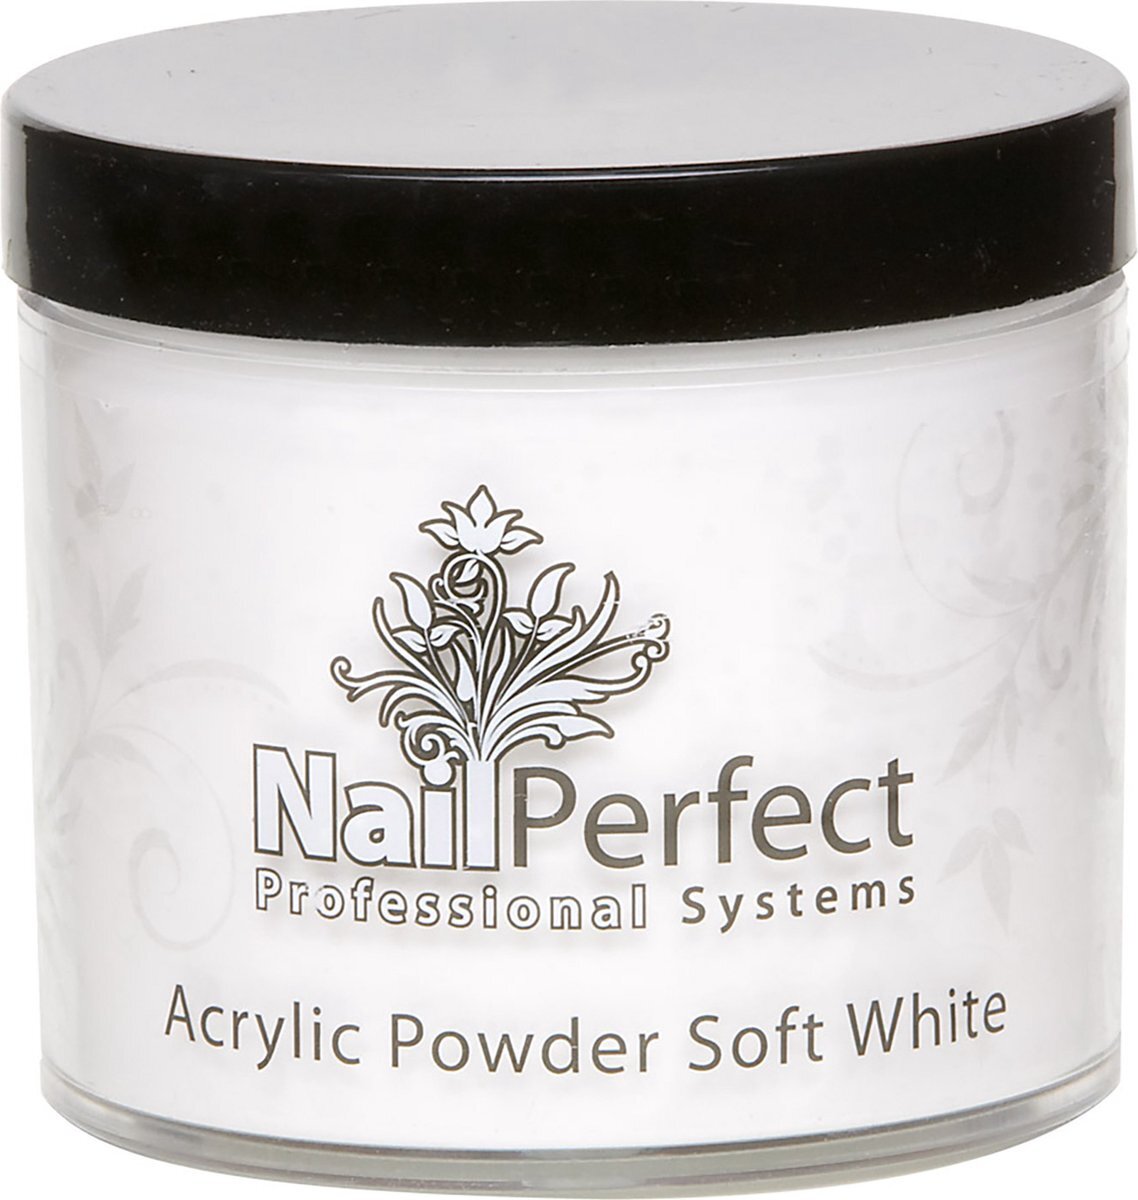 Nailperfect Nail Perfect - Basic Acrylic Powder - Soft White - 25 gr